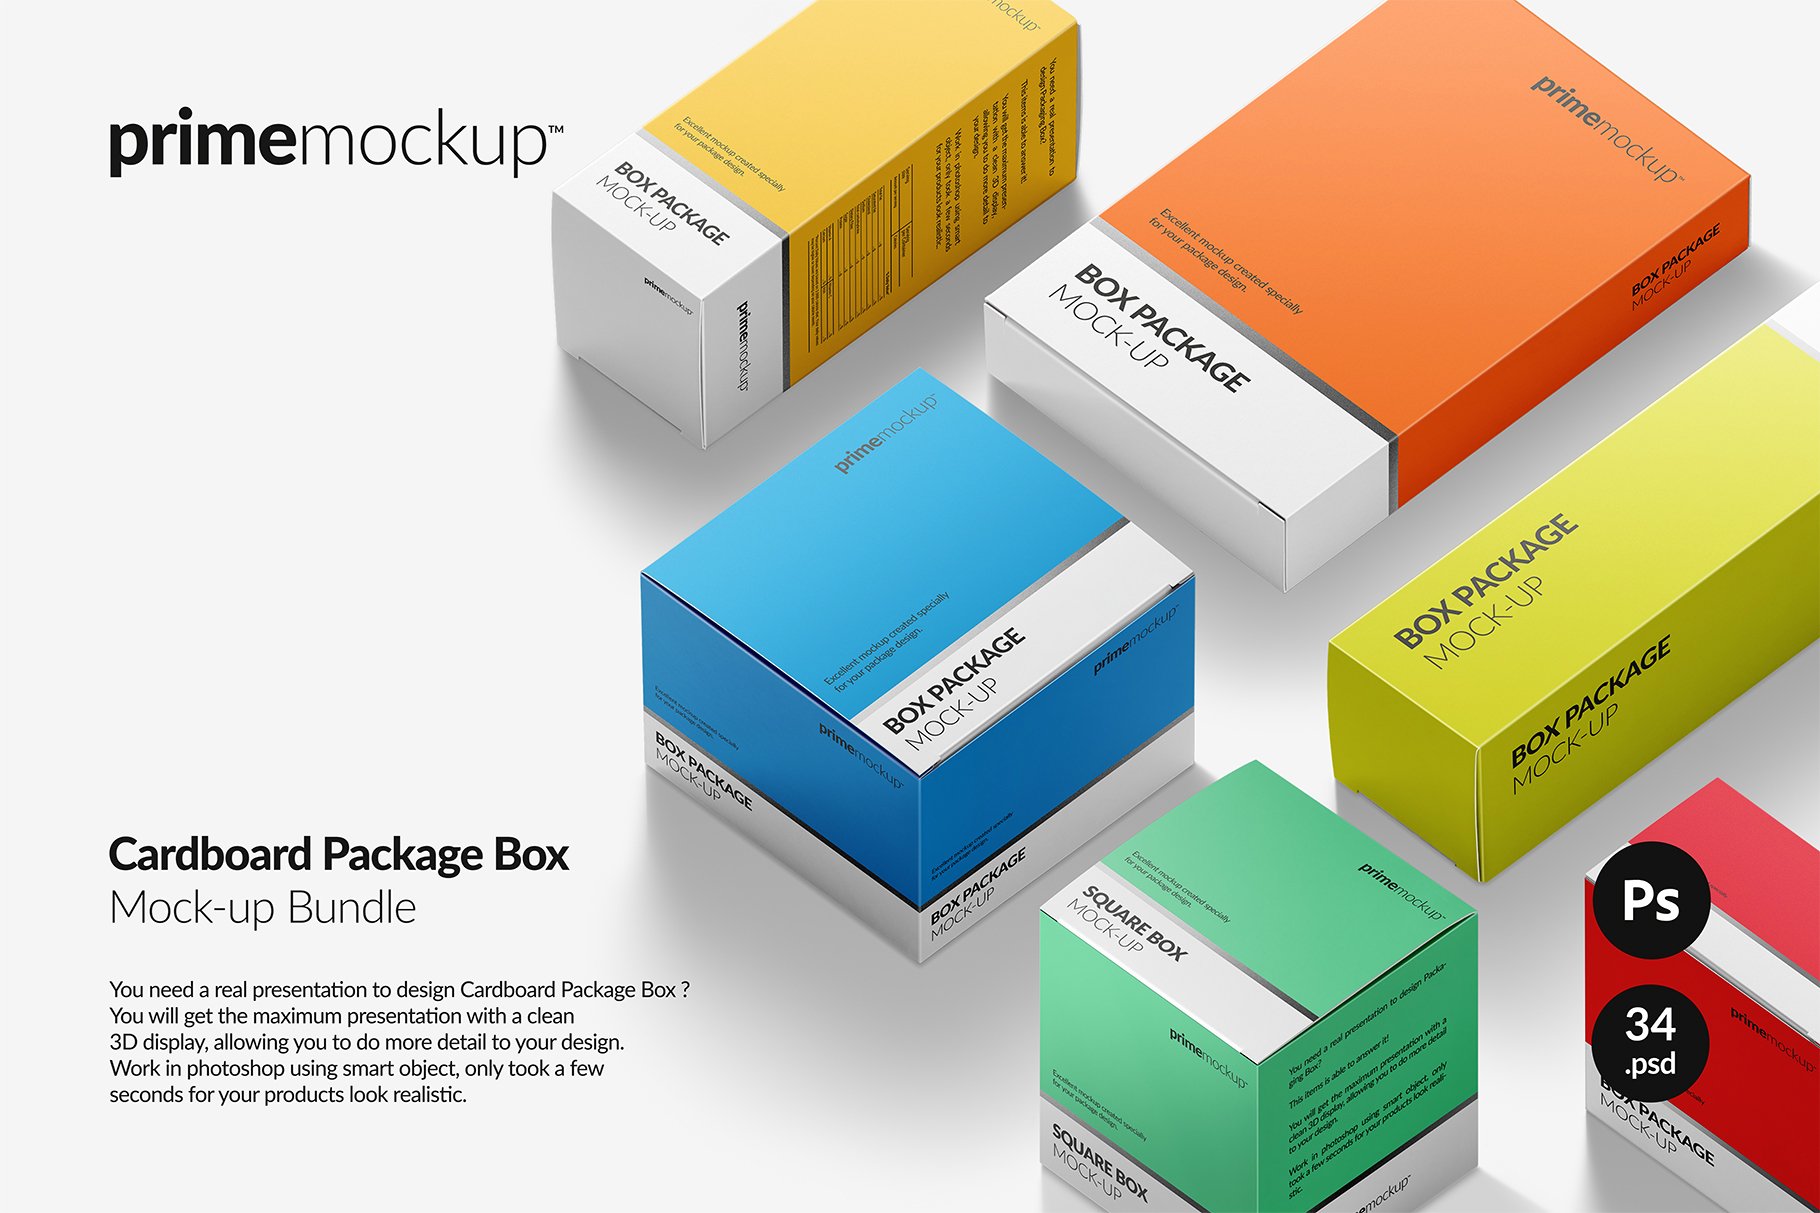 Cardboard Package Box Mockup Bundle cover image.